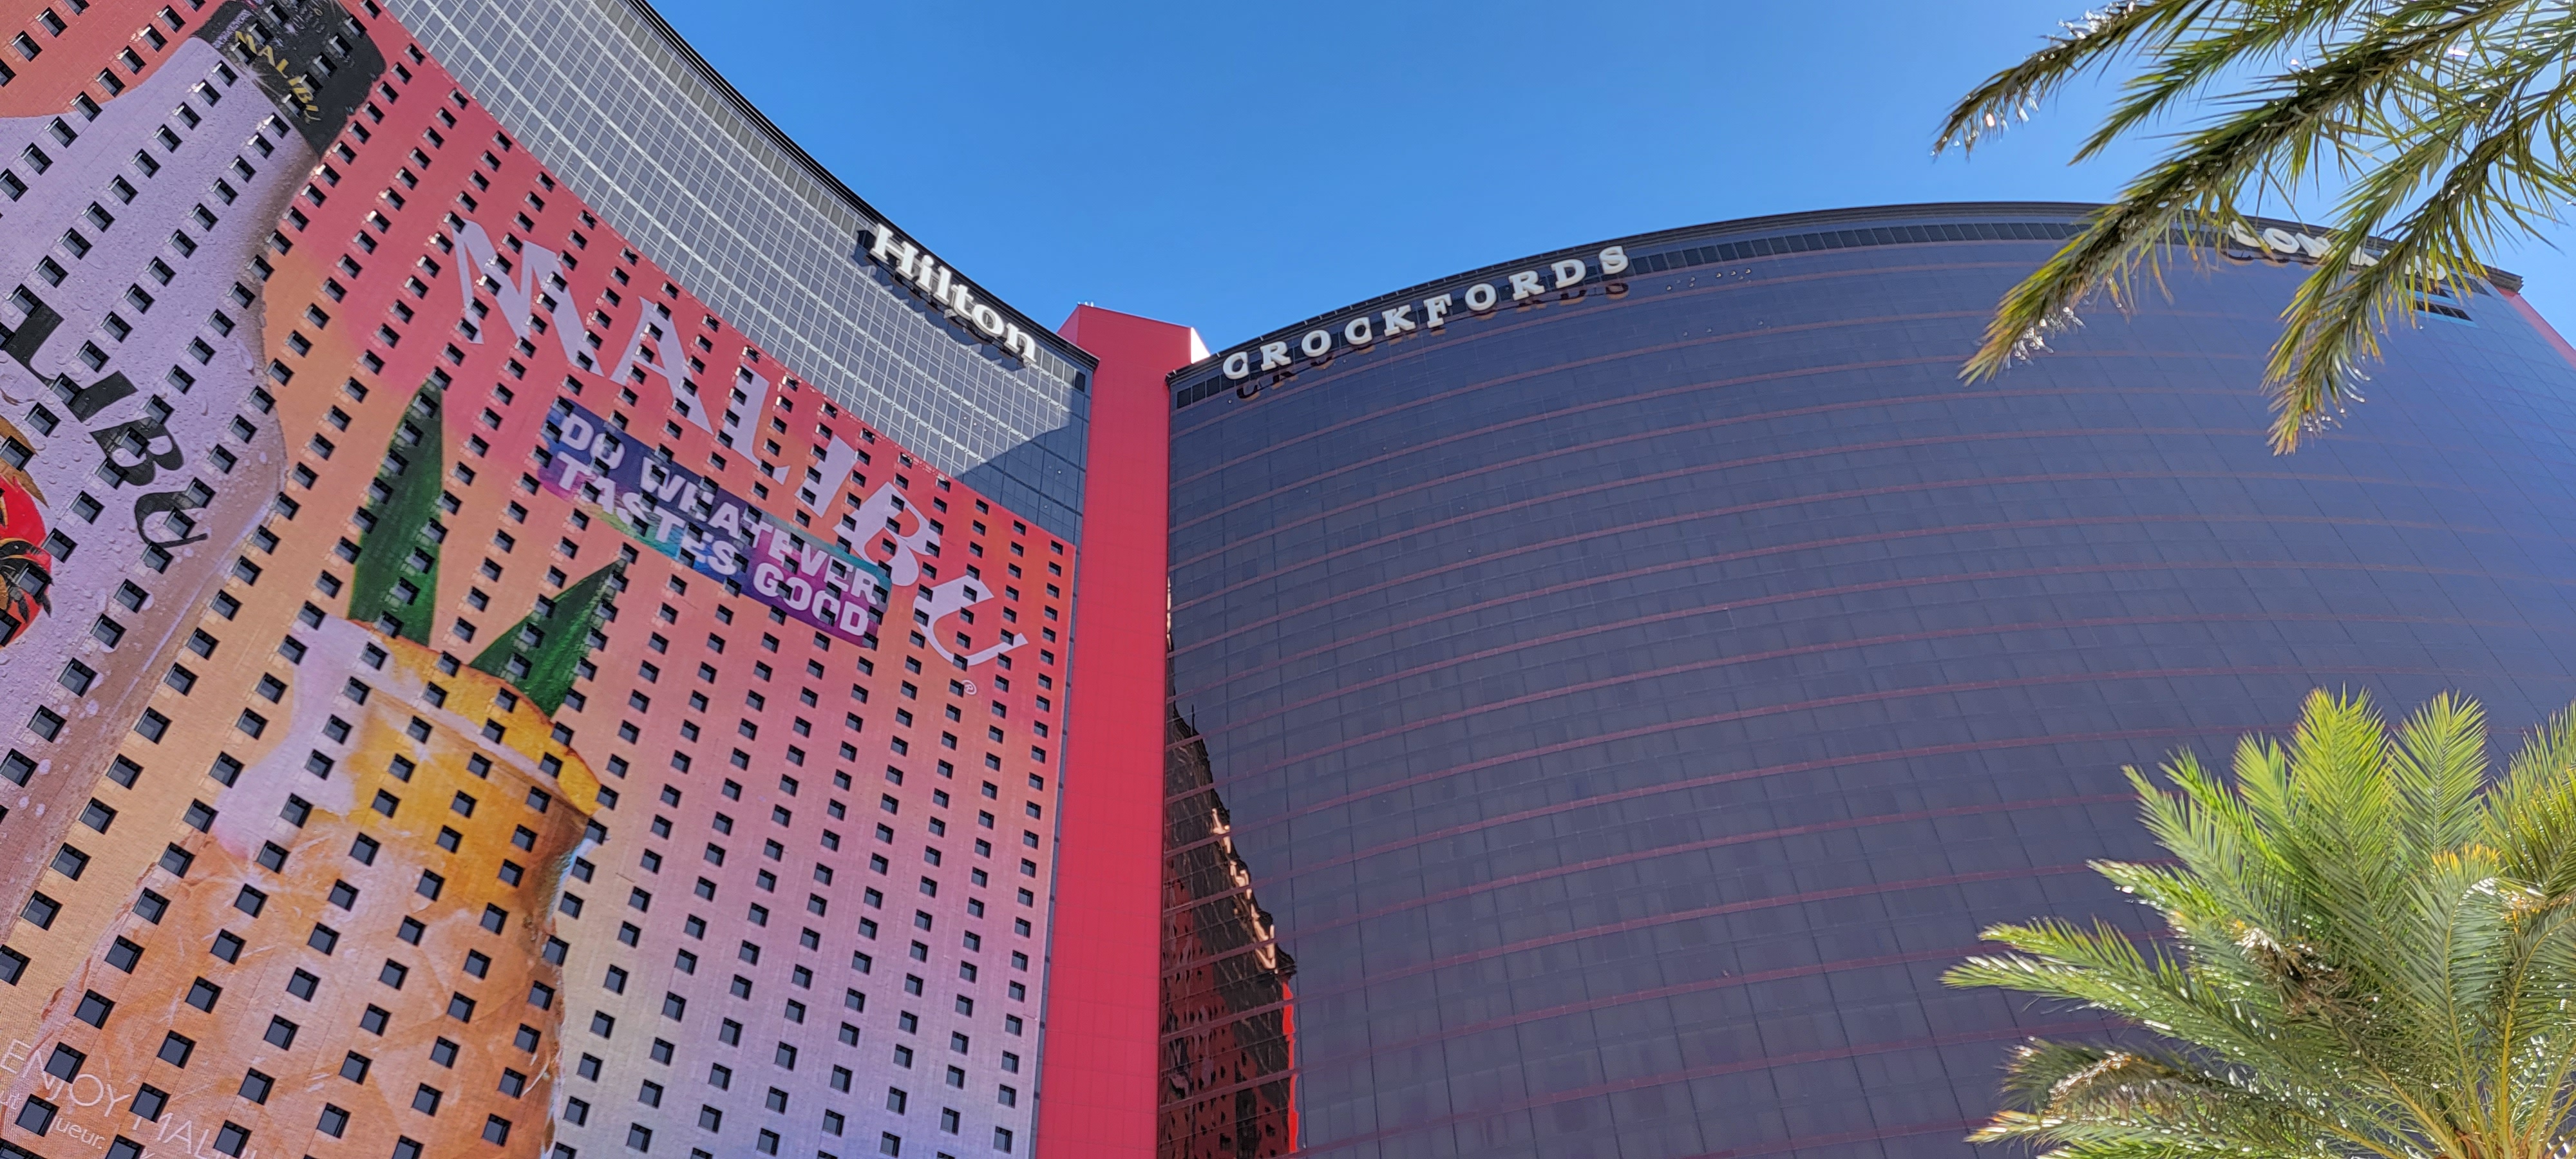 Conrad & Hilton hotels Resorts World Las Vegas review - Turning left for  less